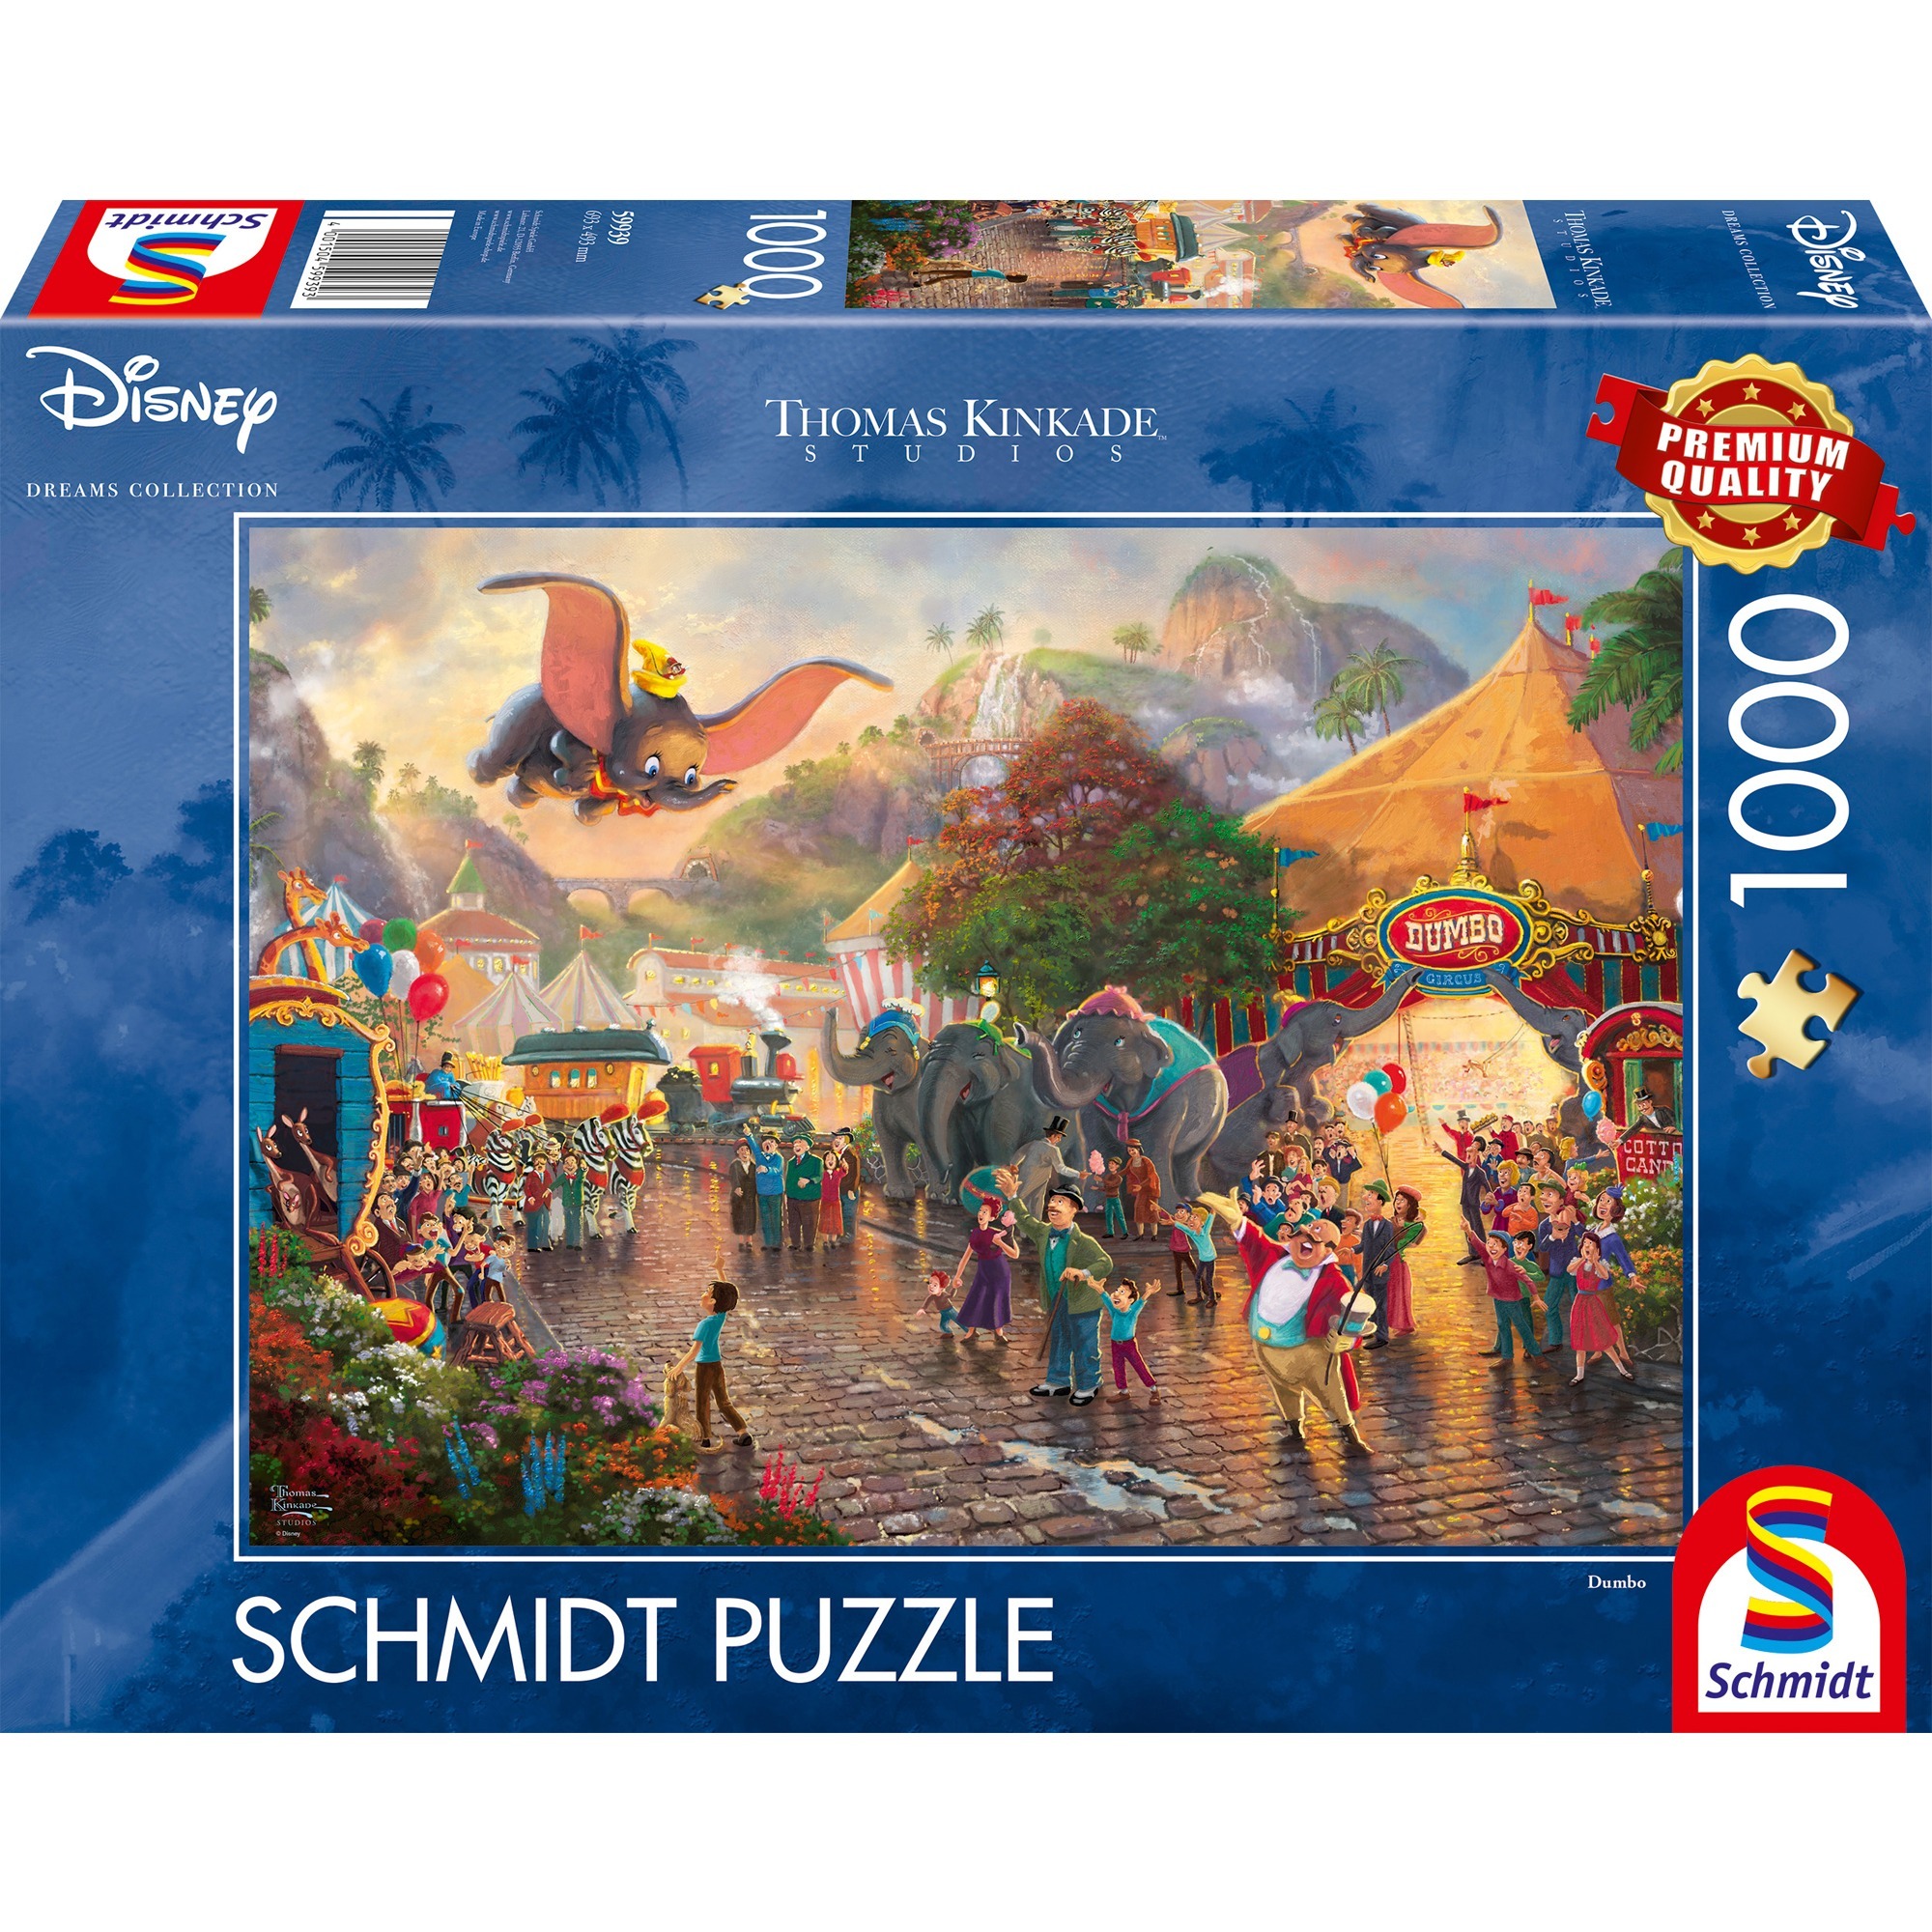 Thomas Kinkade Studios: Disney - Dumbo, Puzzle